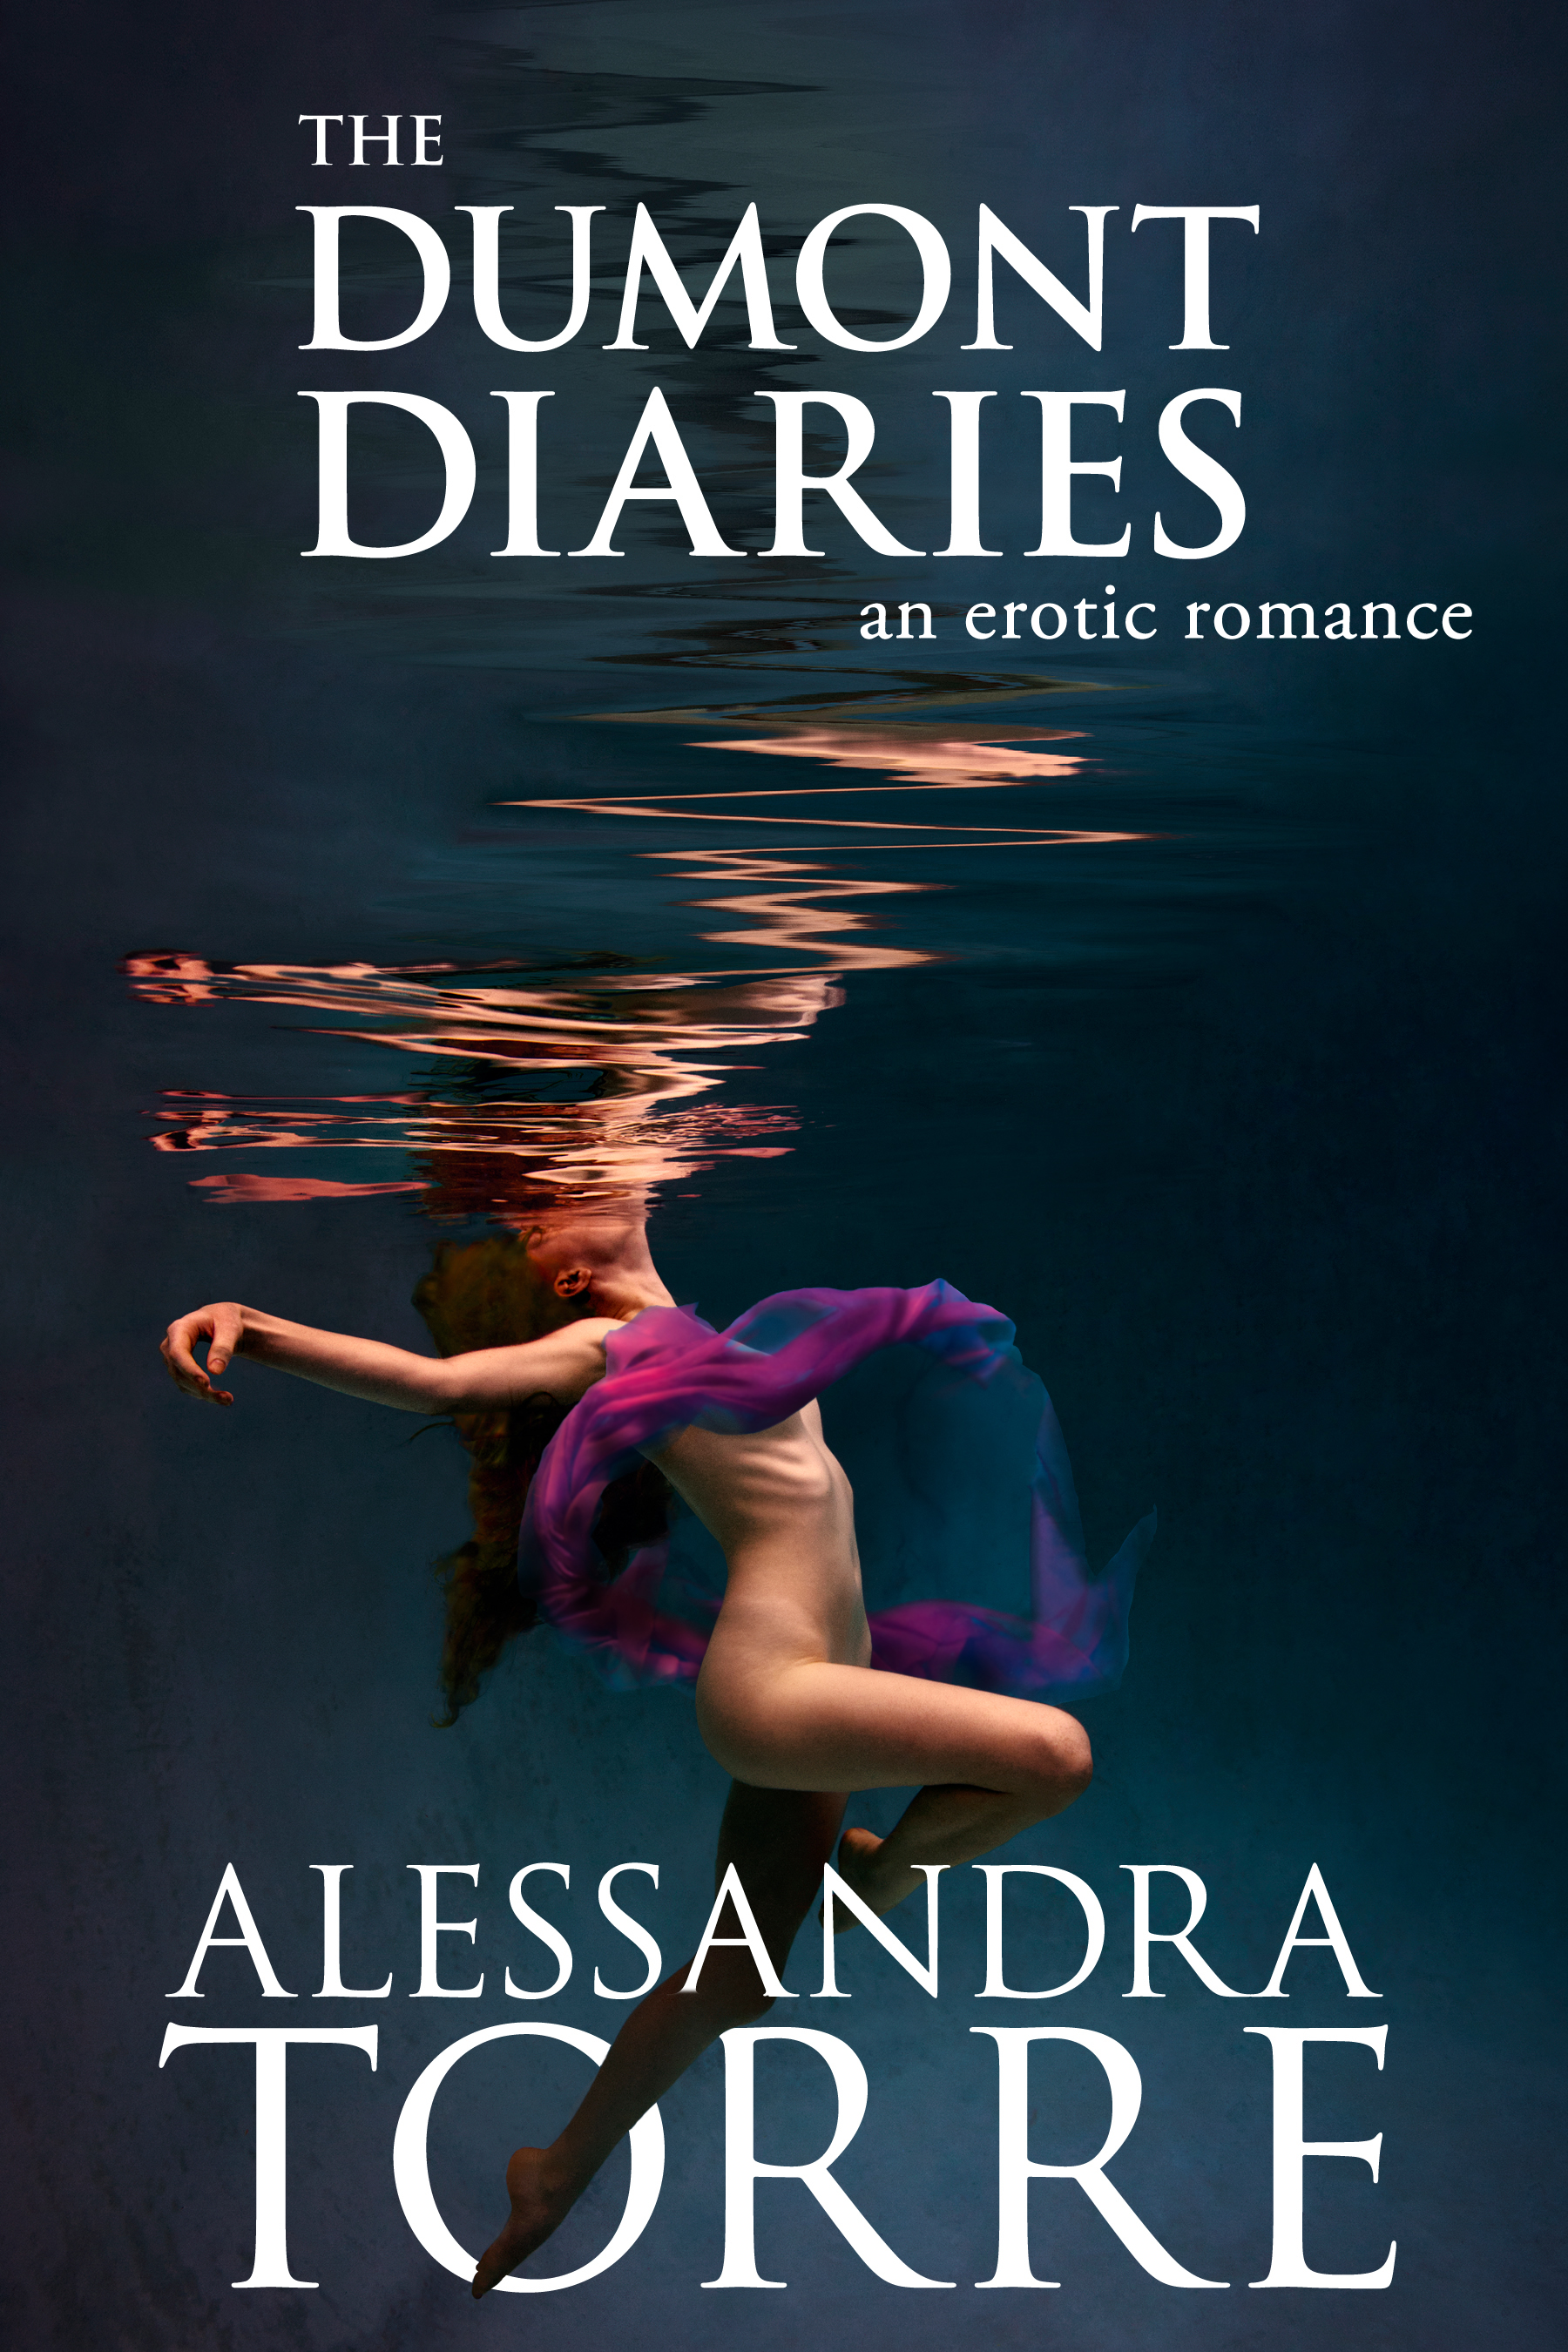 Blindfolded Innocence, book 1 of Alessandra Torre's latest series! It  ROCKS!!!